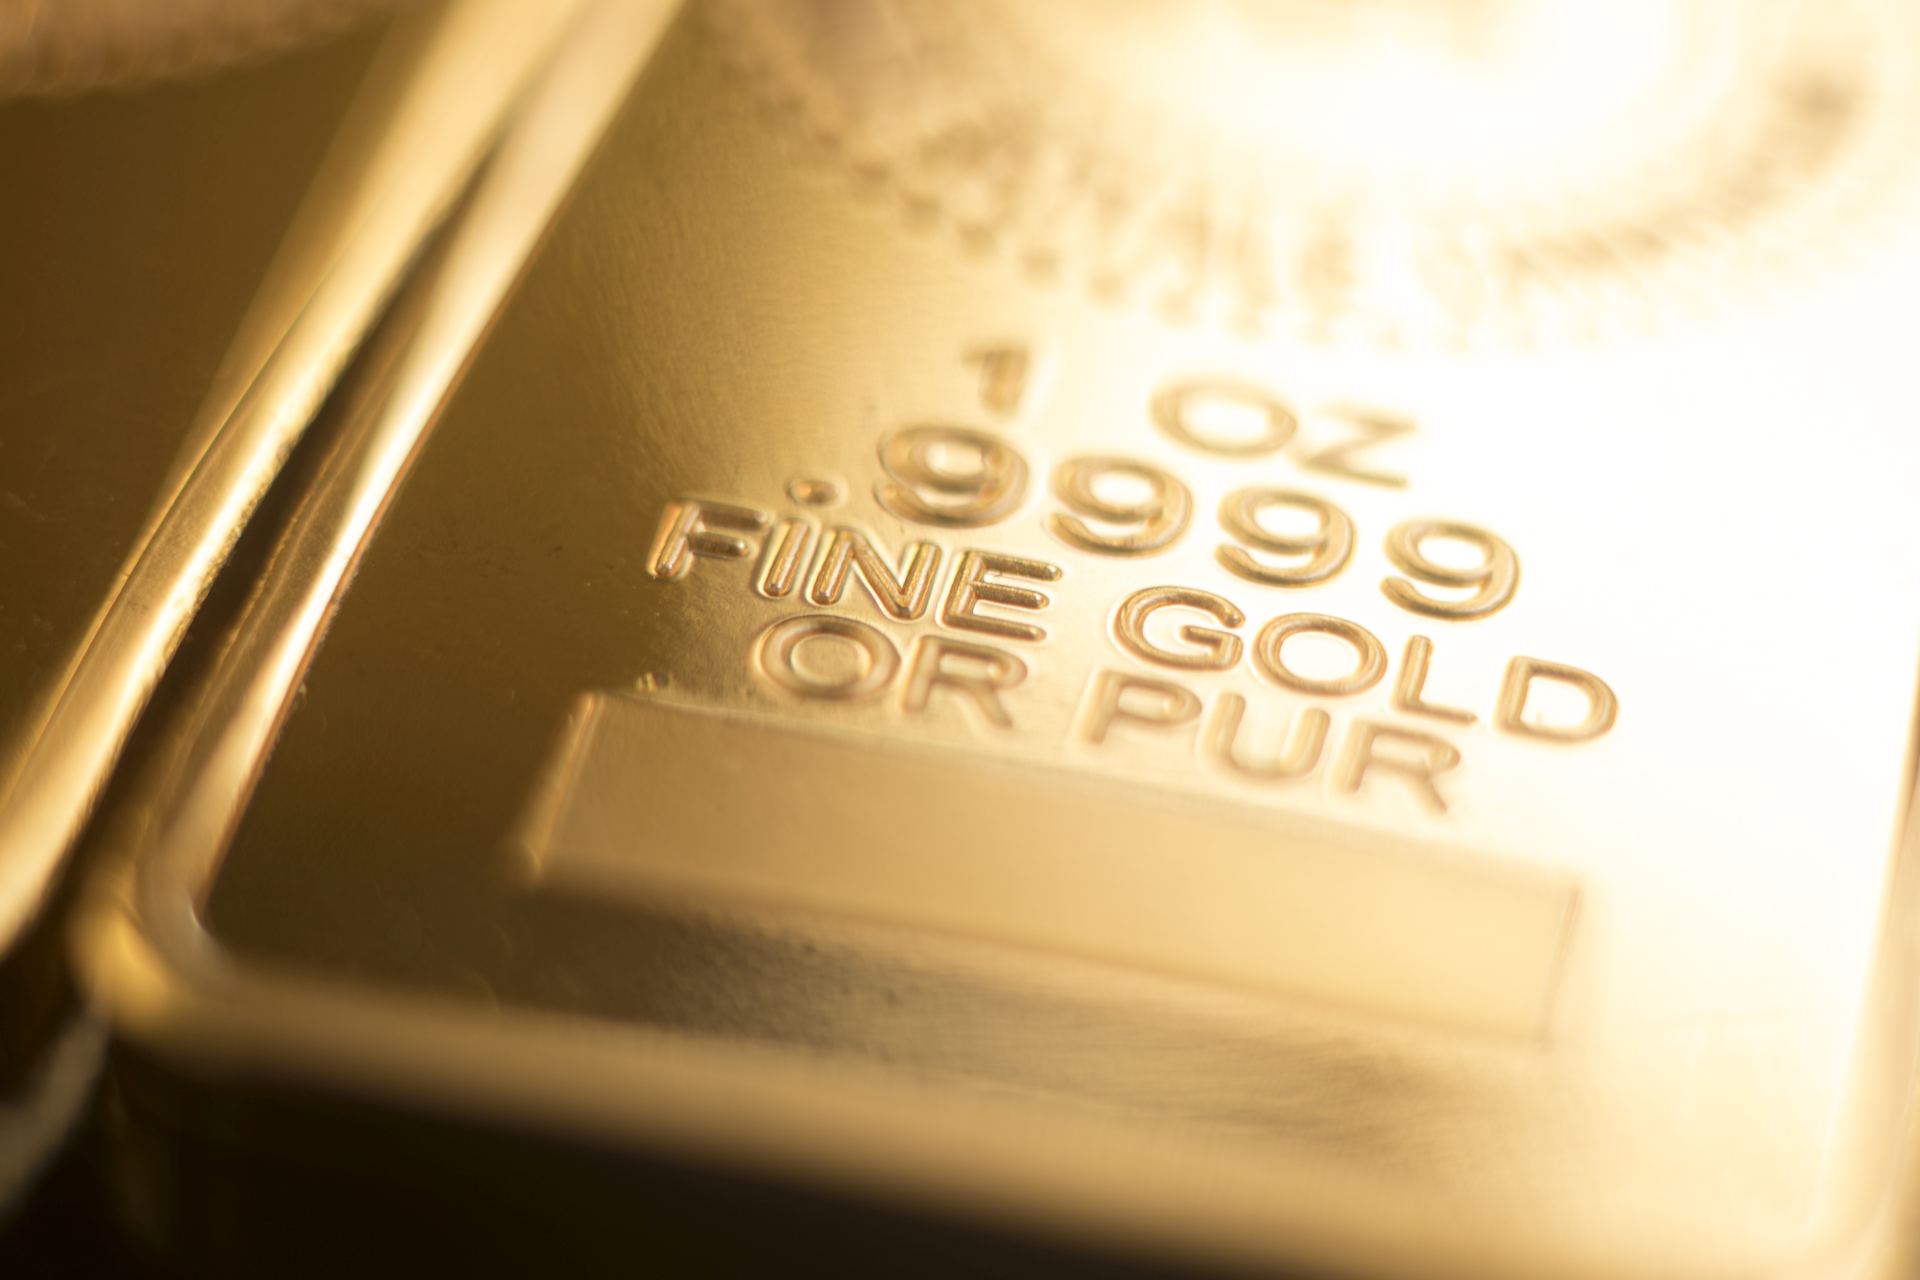  Švýcarsko kovy obchod zlato leden 